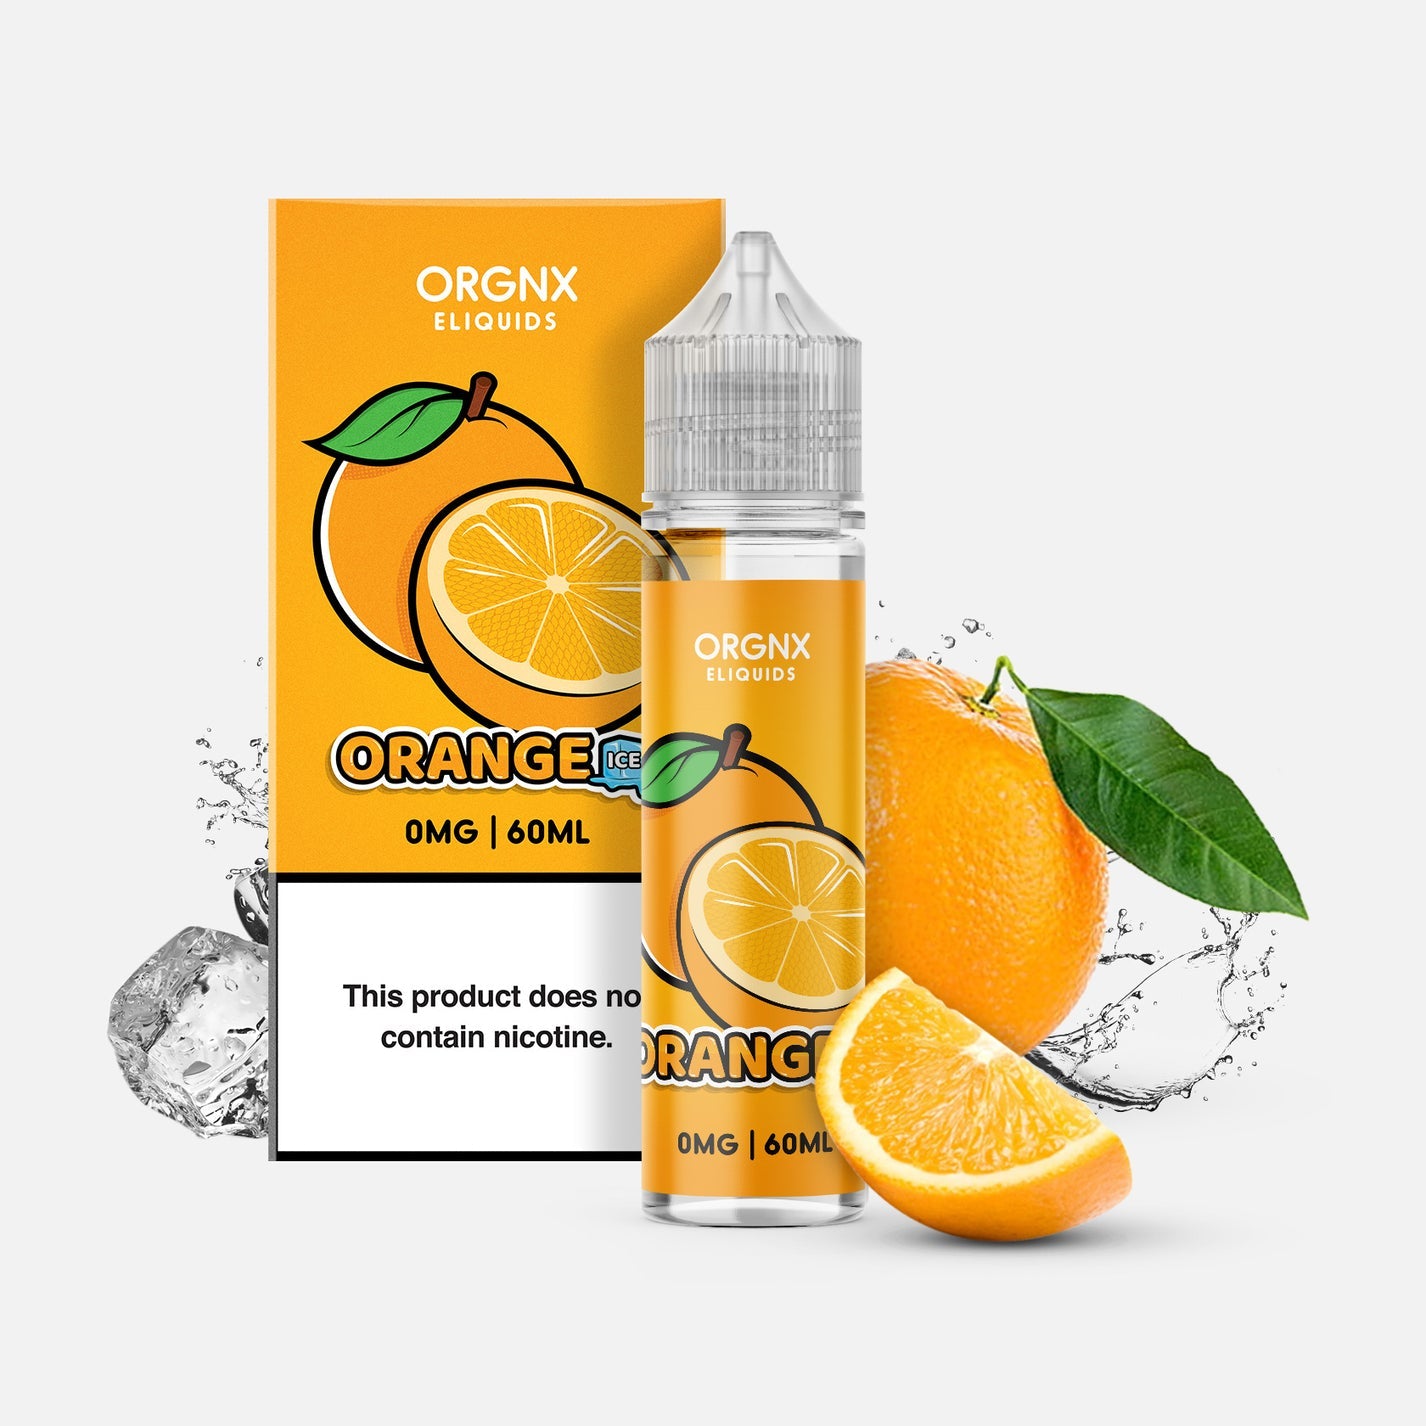 ORGNX: Orange Ice